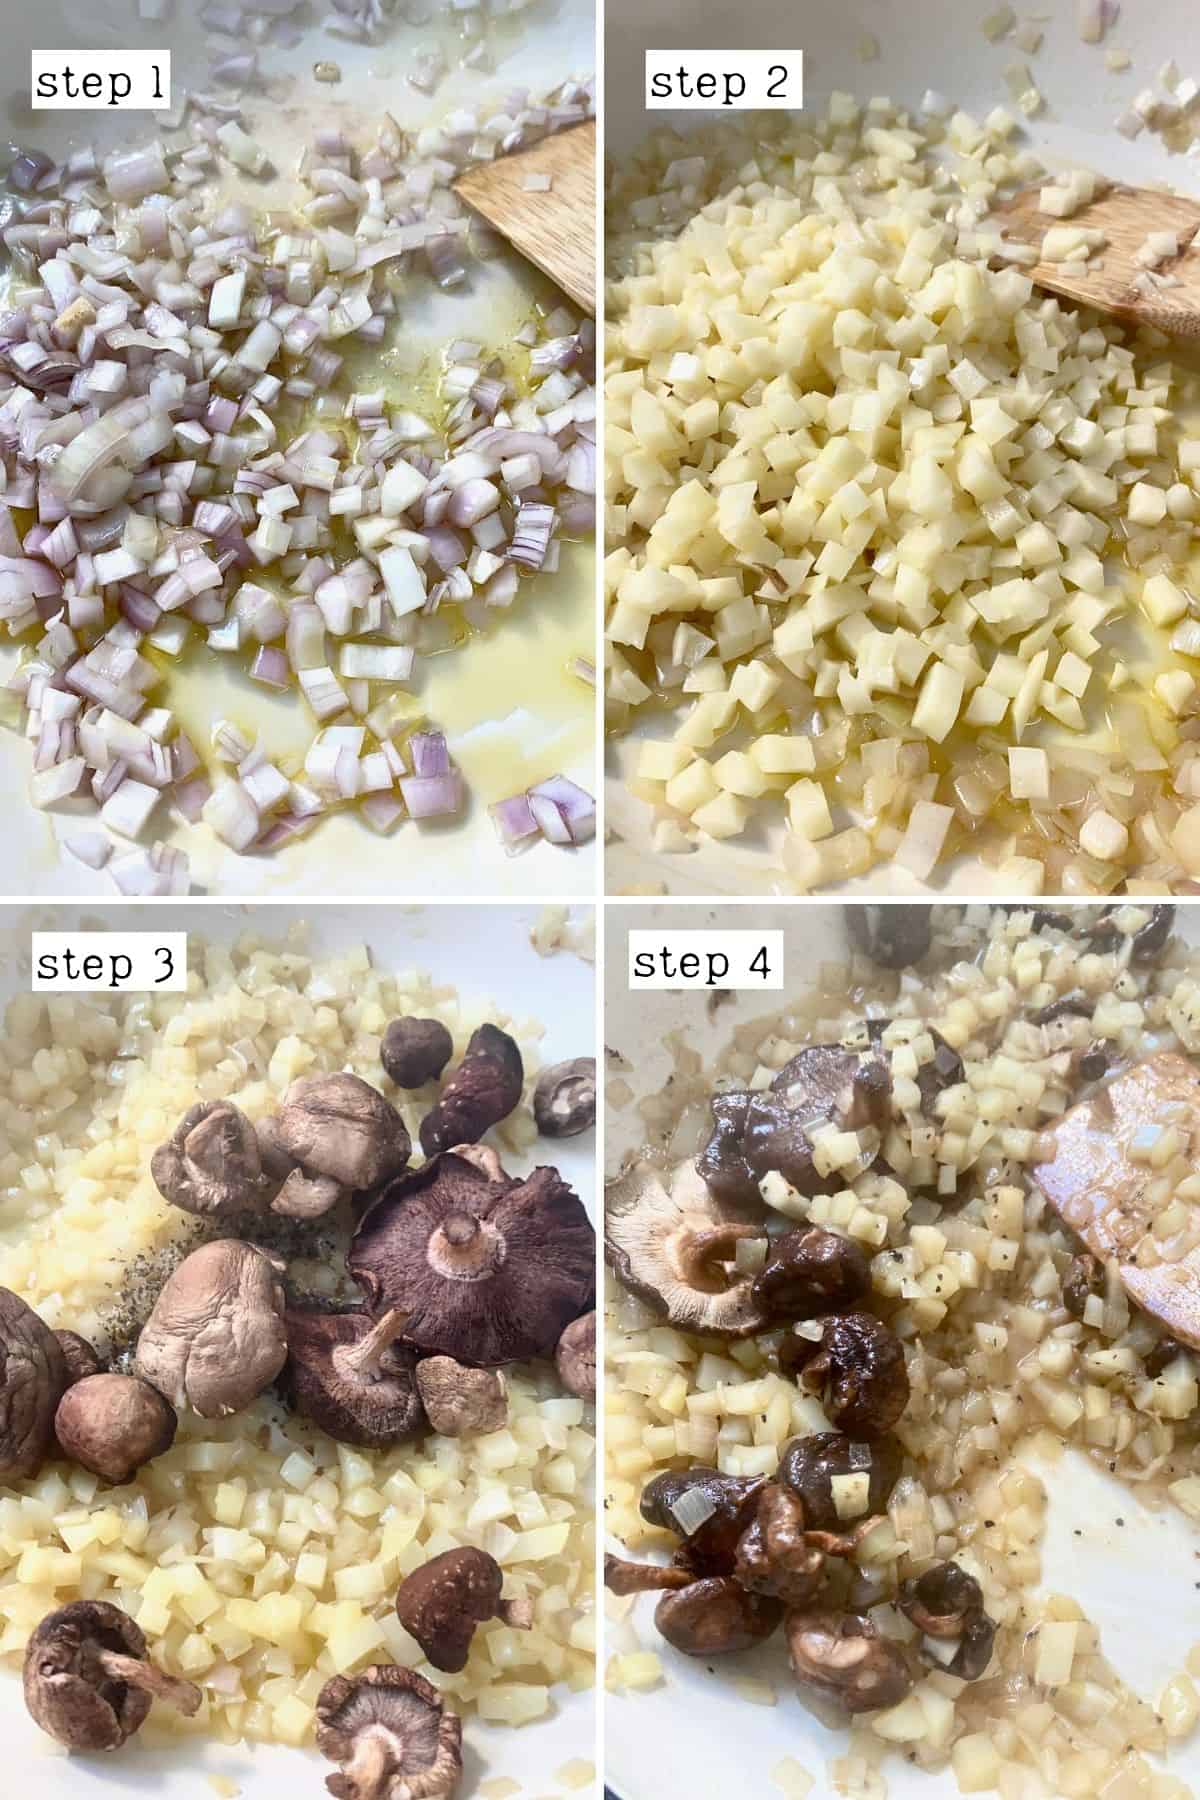 Steps for preparing garlic soup